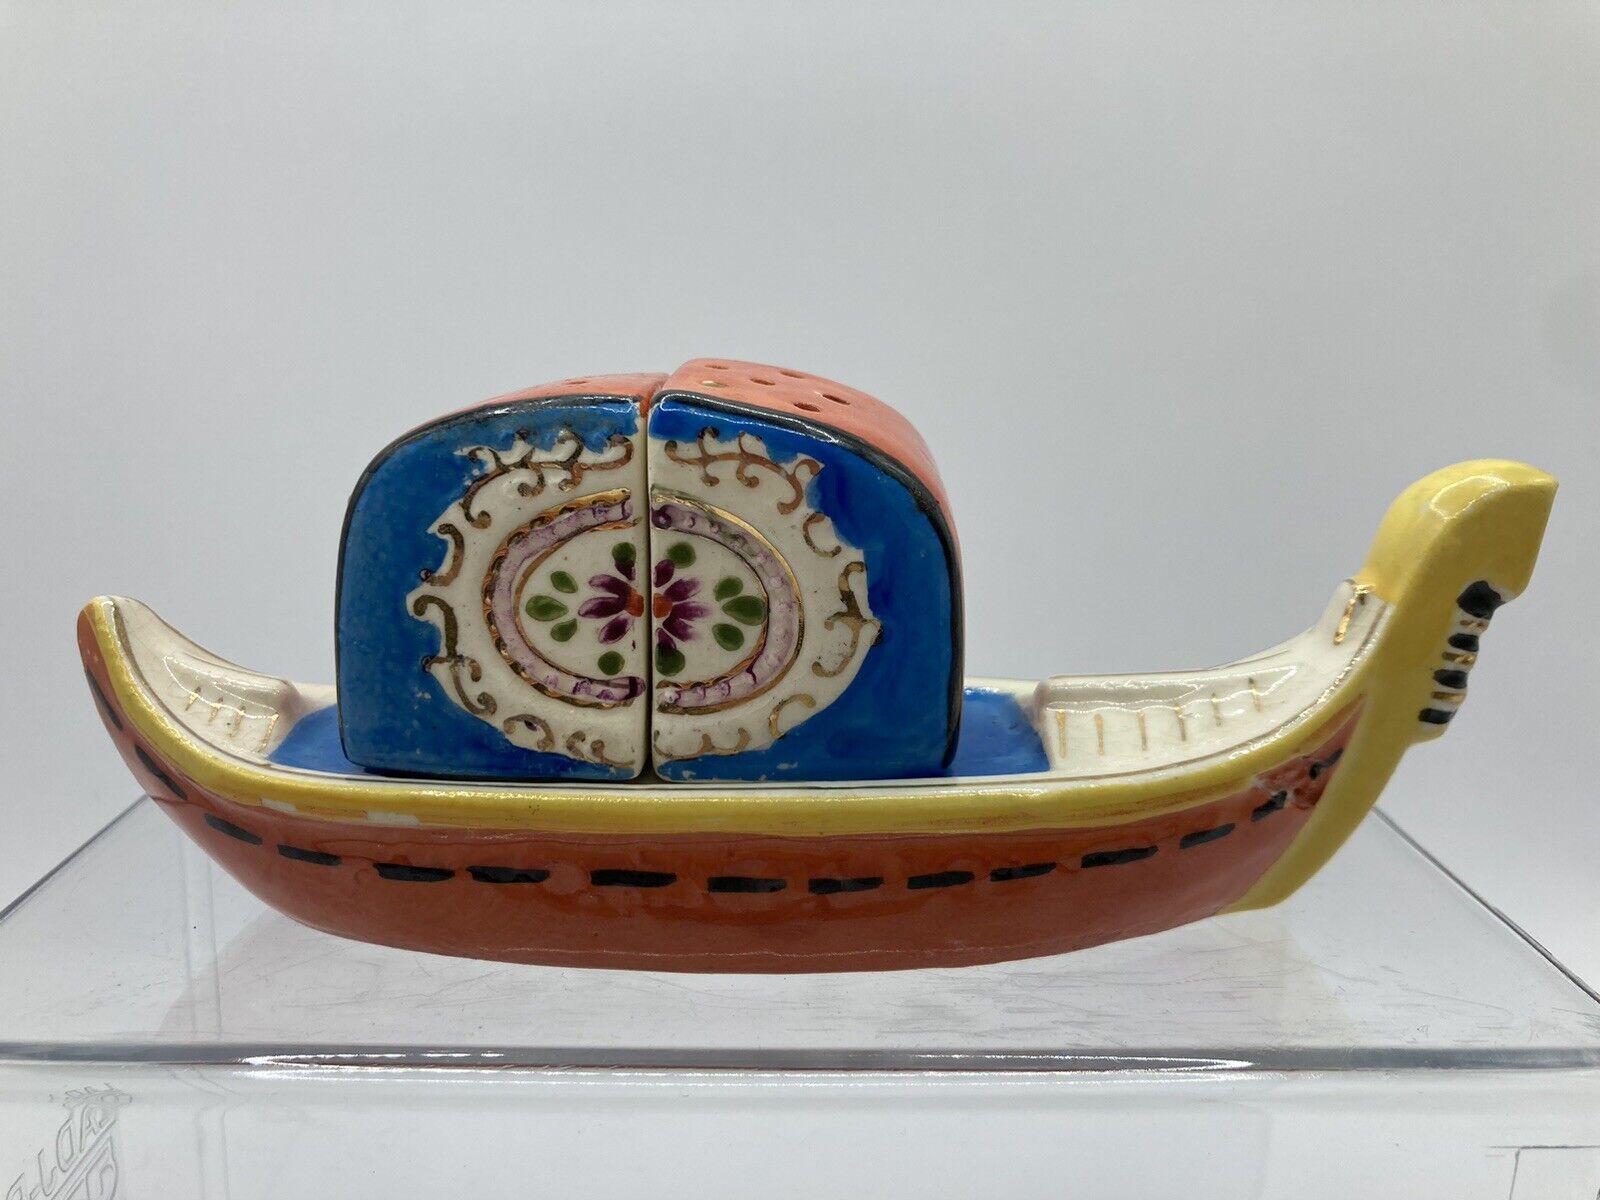 Vintage Meiko China Ceramic Gondola Boat Salt & Pepper Shakers Made in Japan